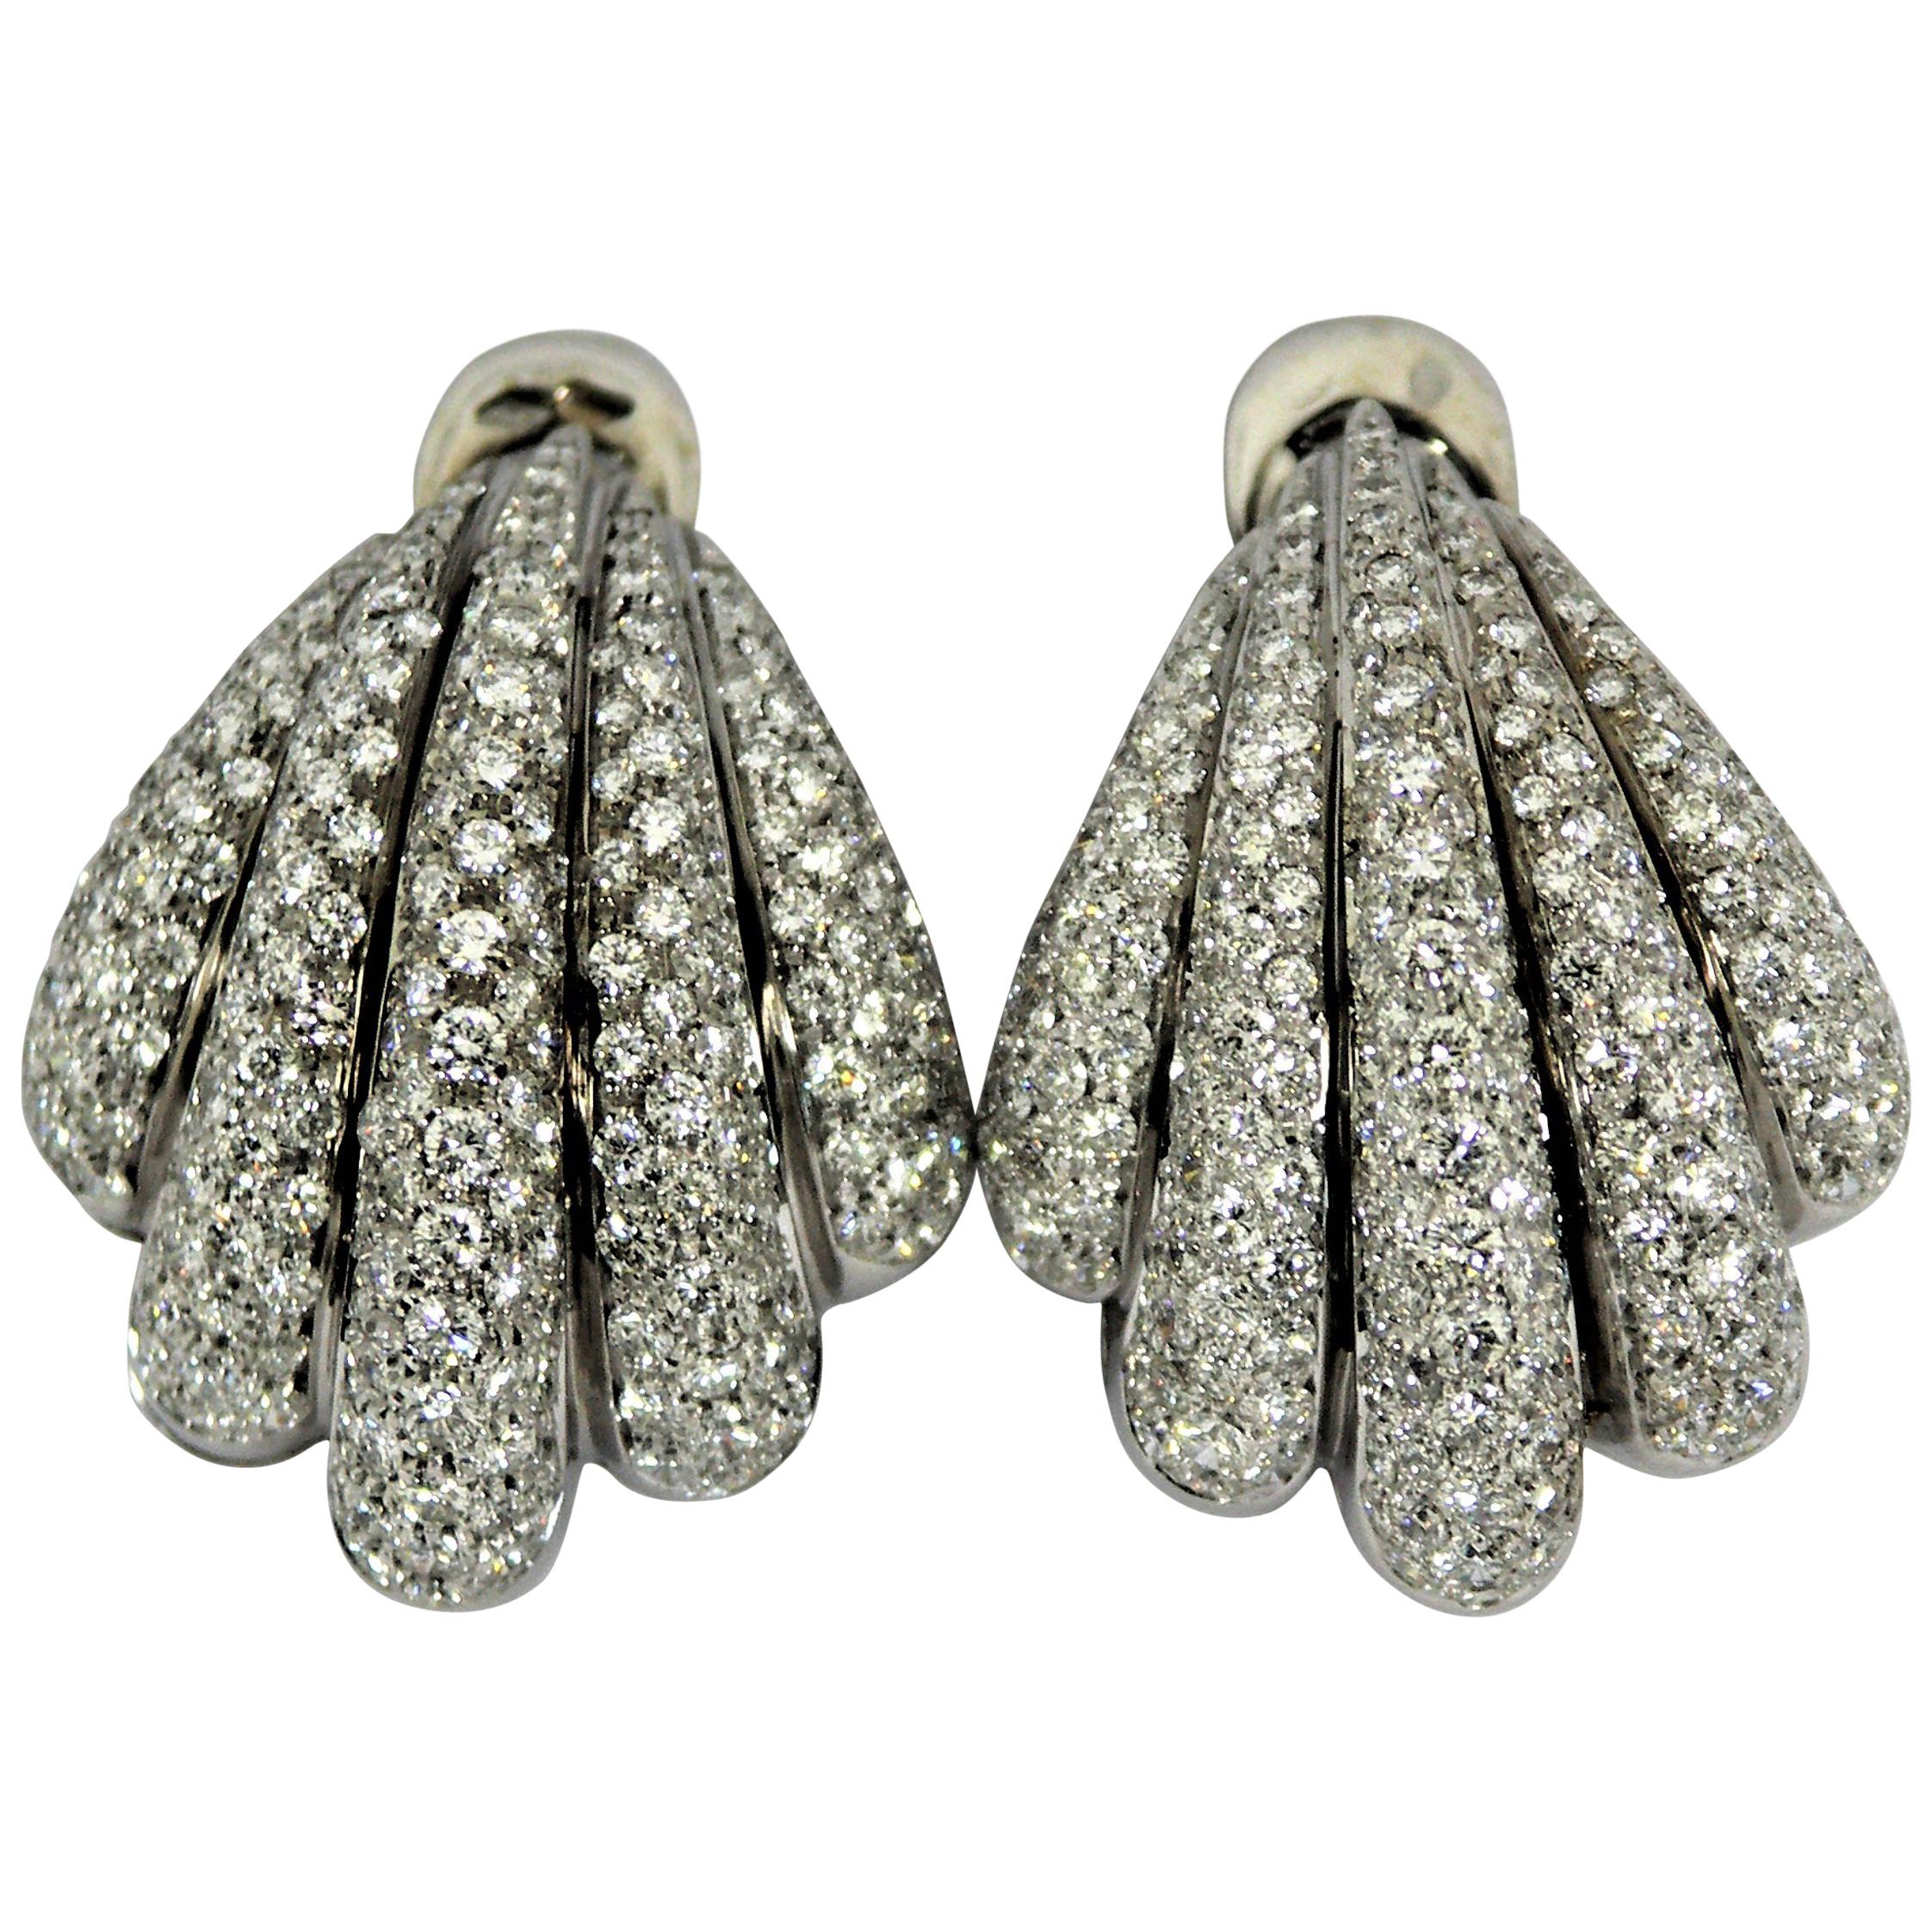 Stylish Seashell Shaped White Gold Earrings with 8CT of Diamonds F/G VS1